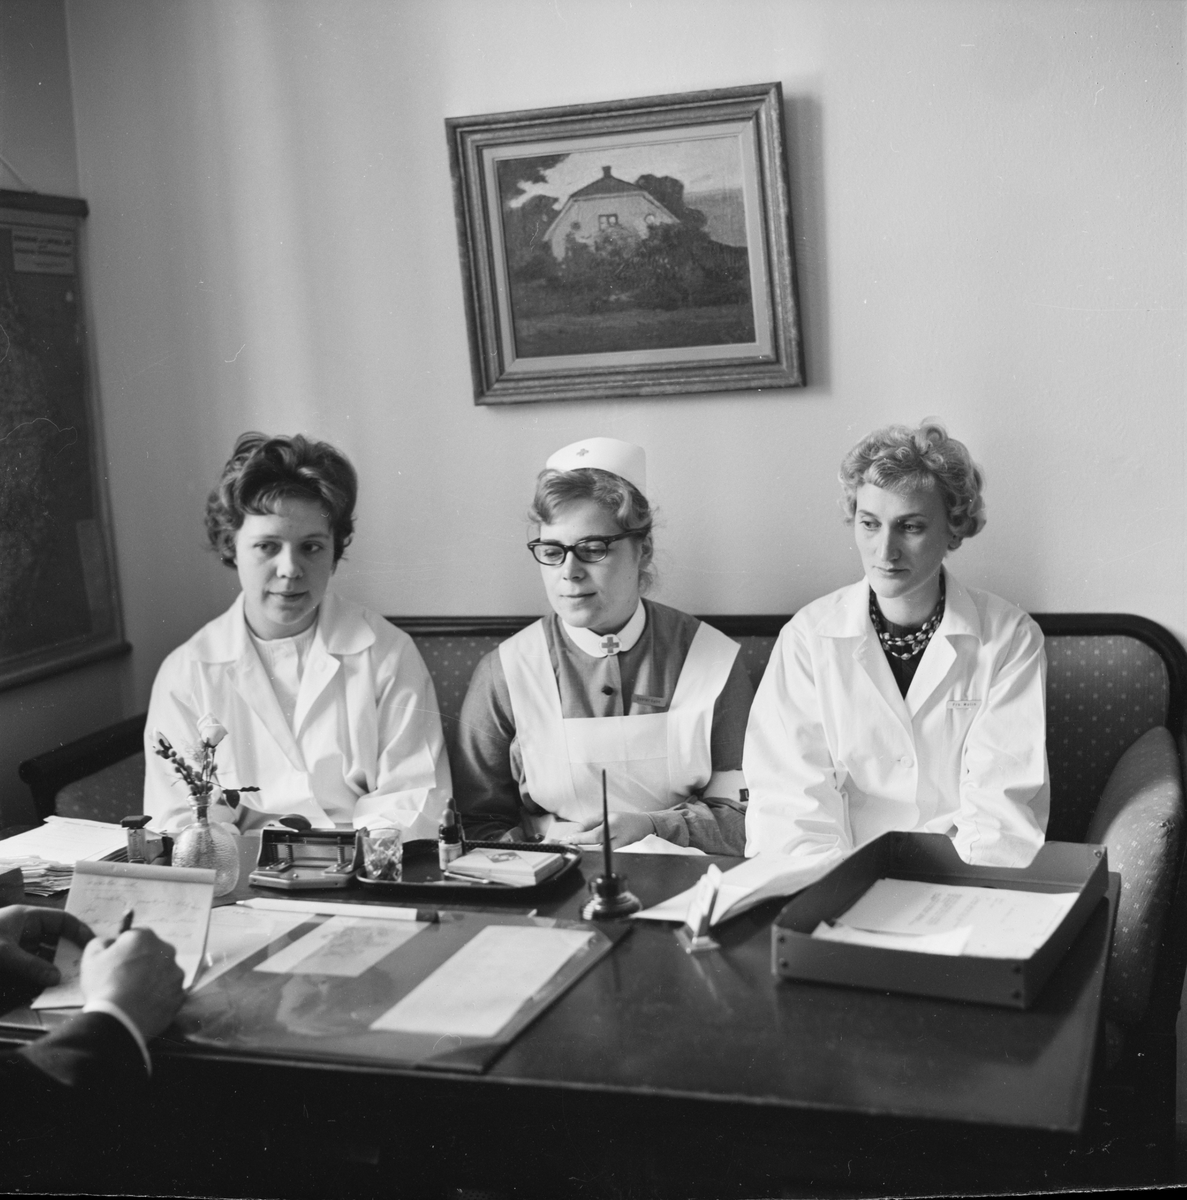 Akademiska sjukhuset, medicin avdelning 23, avdelningssekreterare, Uppsala, februari 1962